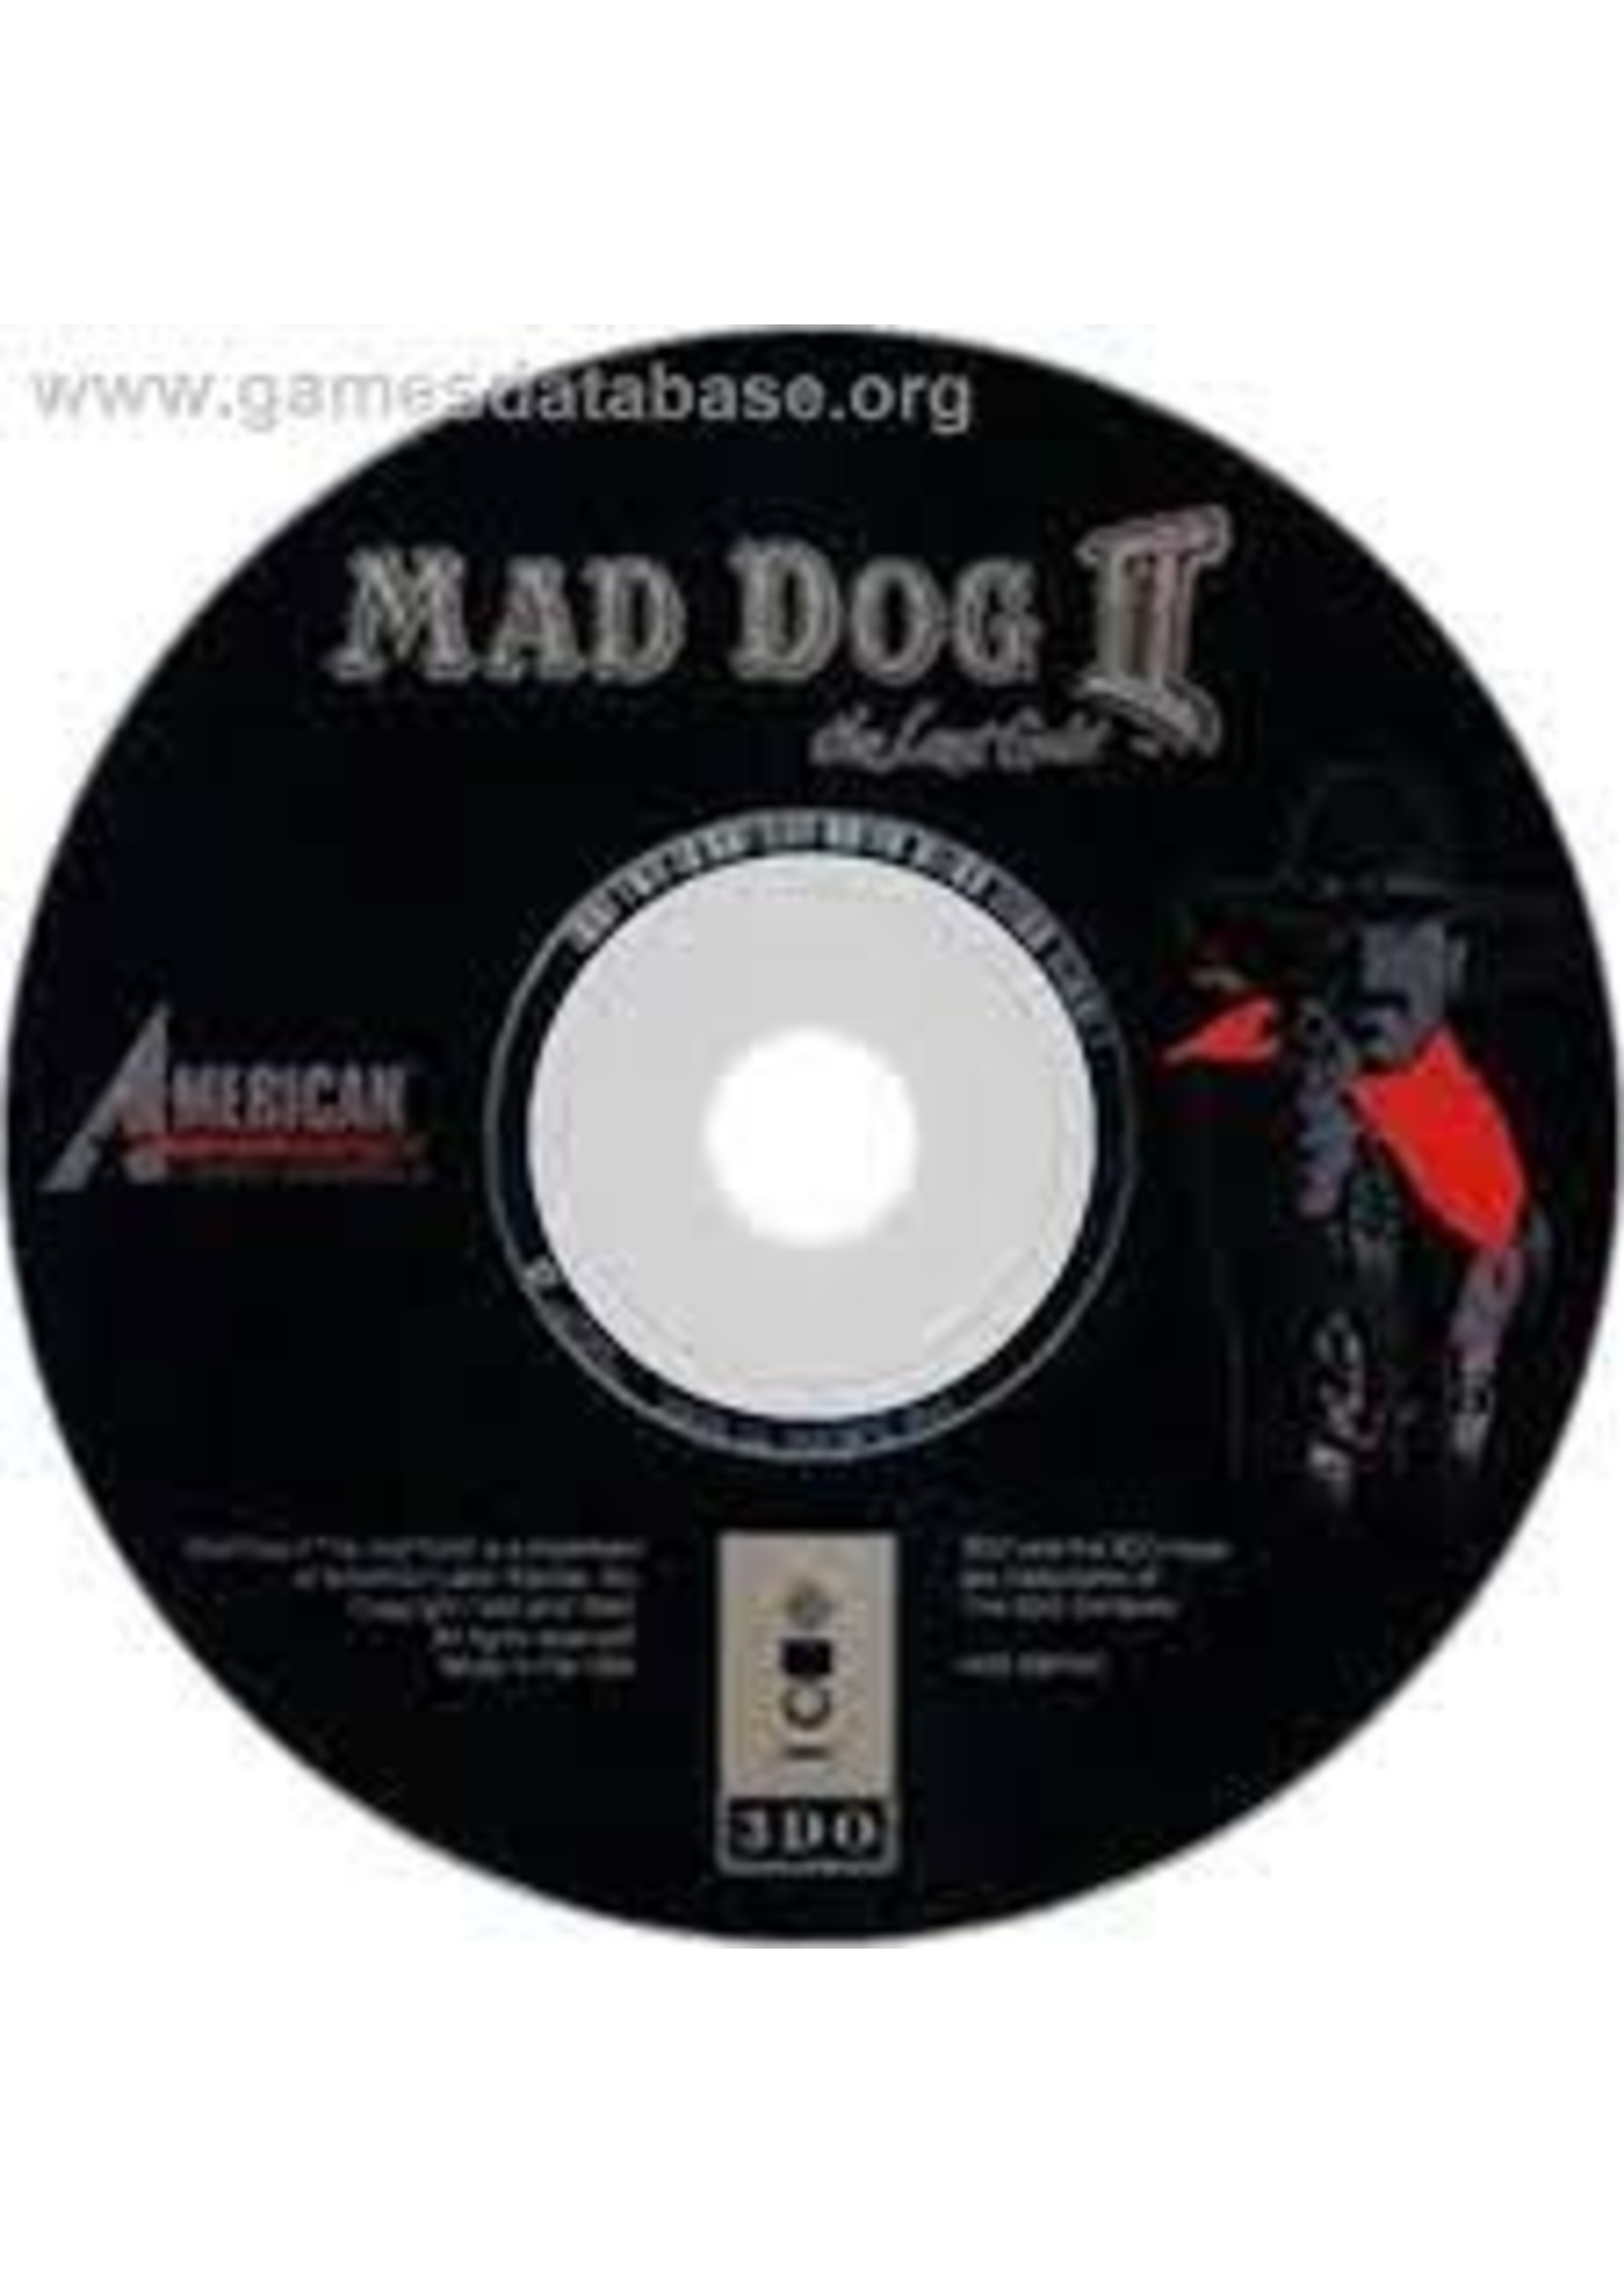 Panasonic 3DO Mad Dog II: The Lost Gold